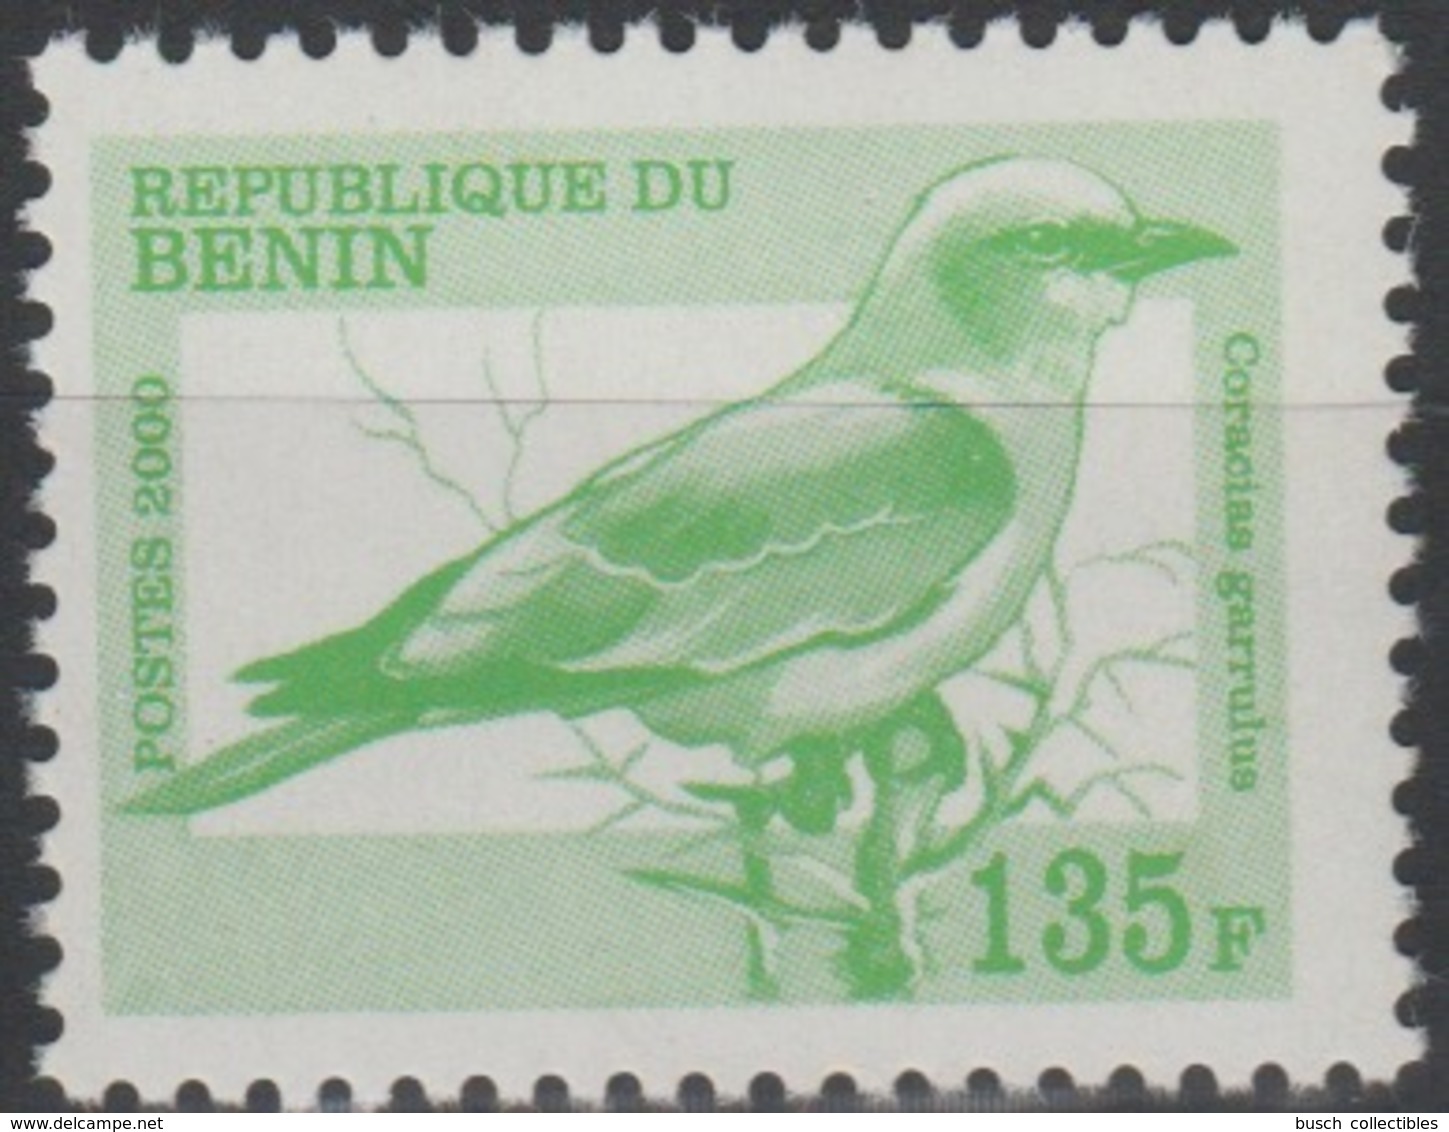 Bénin 2000 Mi. H1232 135 F Fauna Faune Bird Oiseau Vogel Coracias Garrulus MNH** Rare - Benin – Dahomey (1960-...)